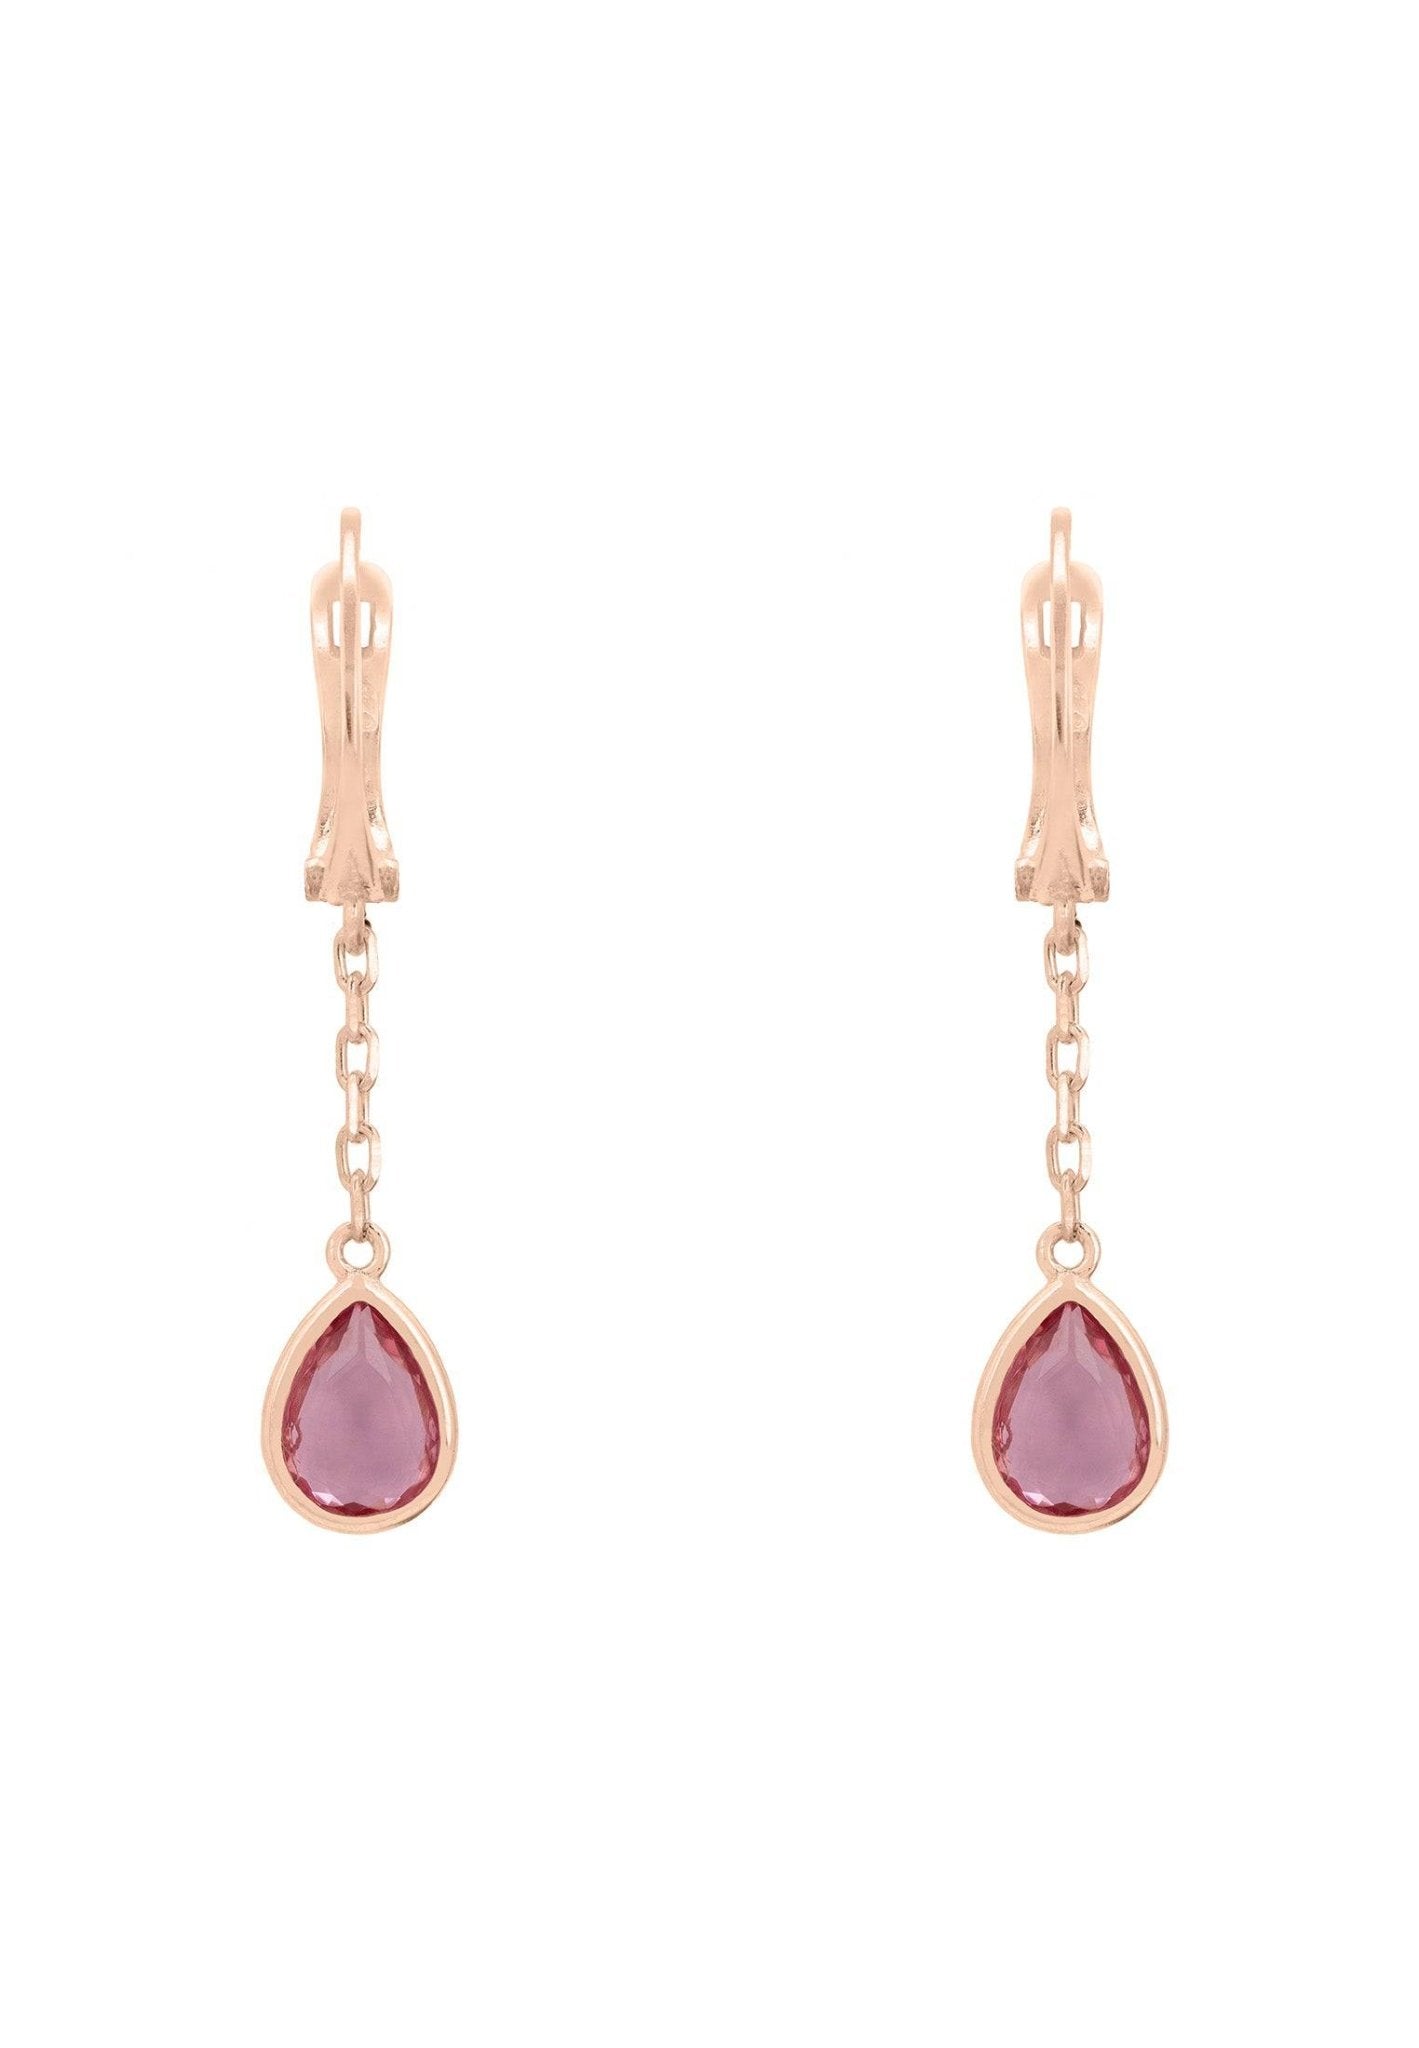 Pisa Chain Drop Earrings Rosegold Pink Tourmaline - LATELITA Earrings